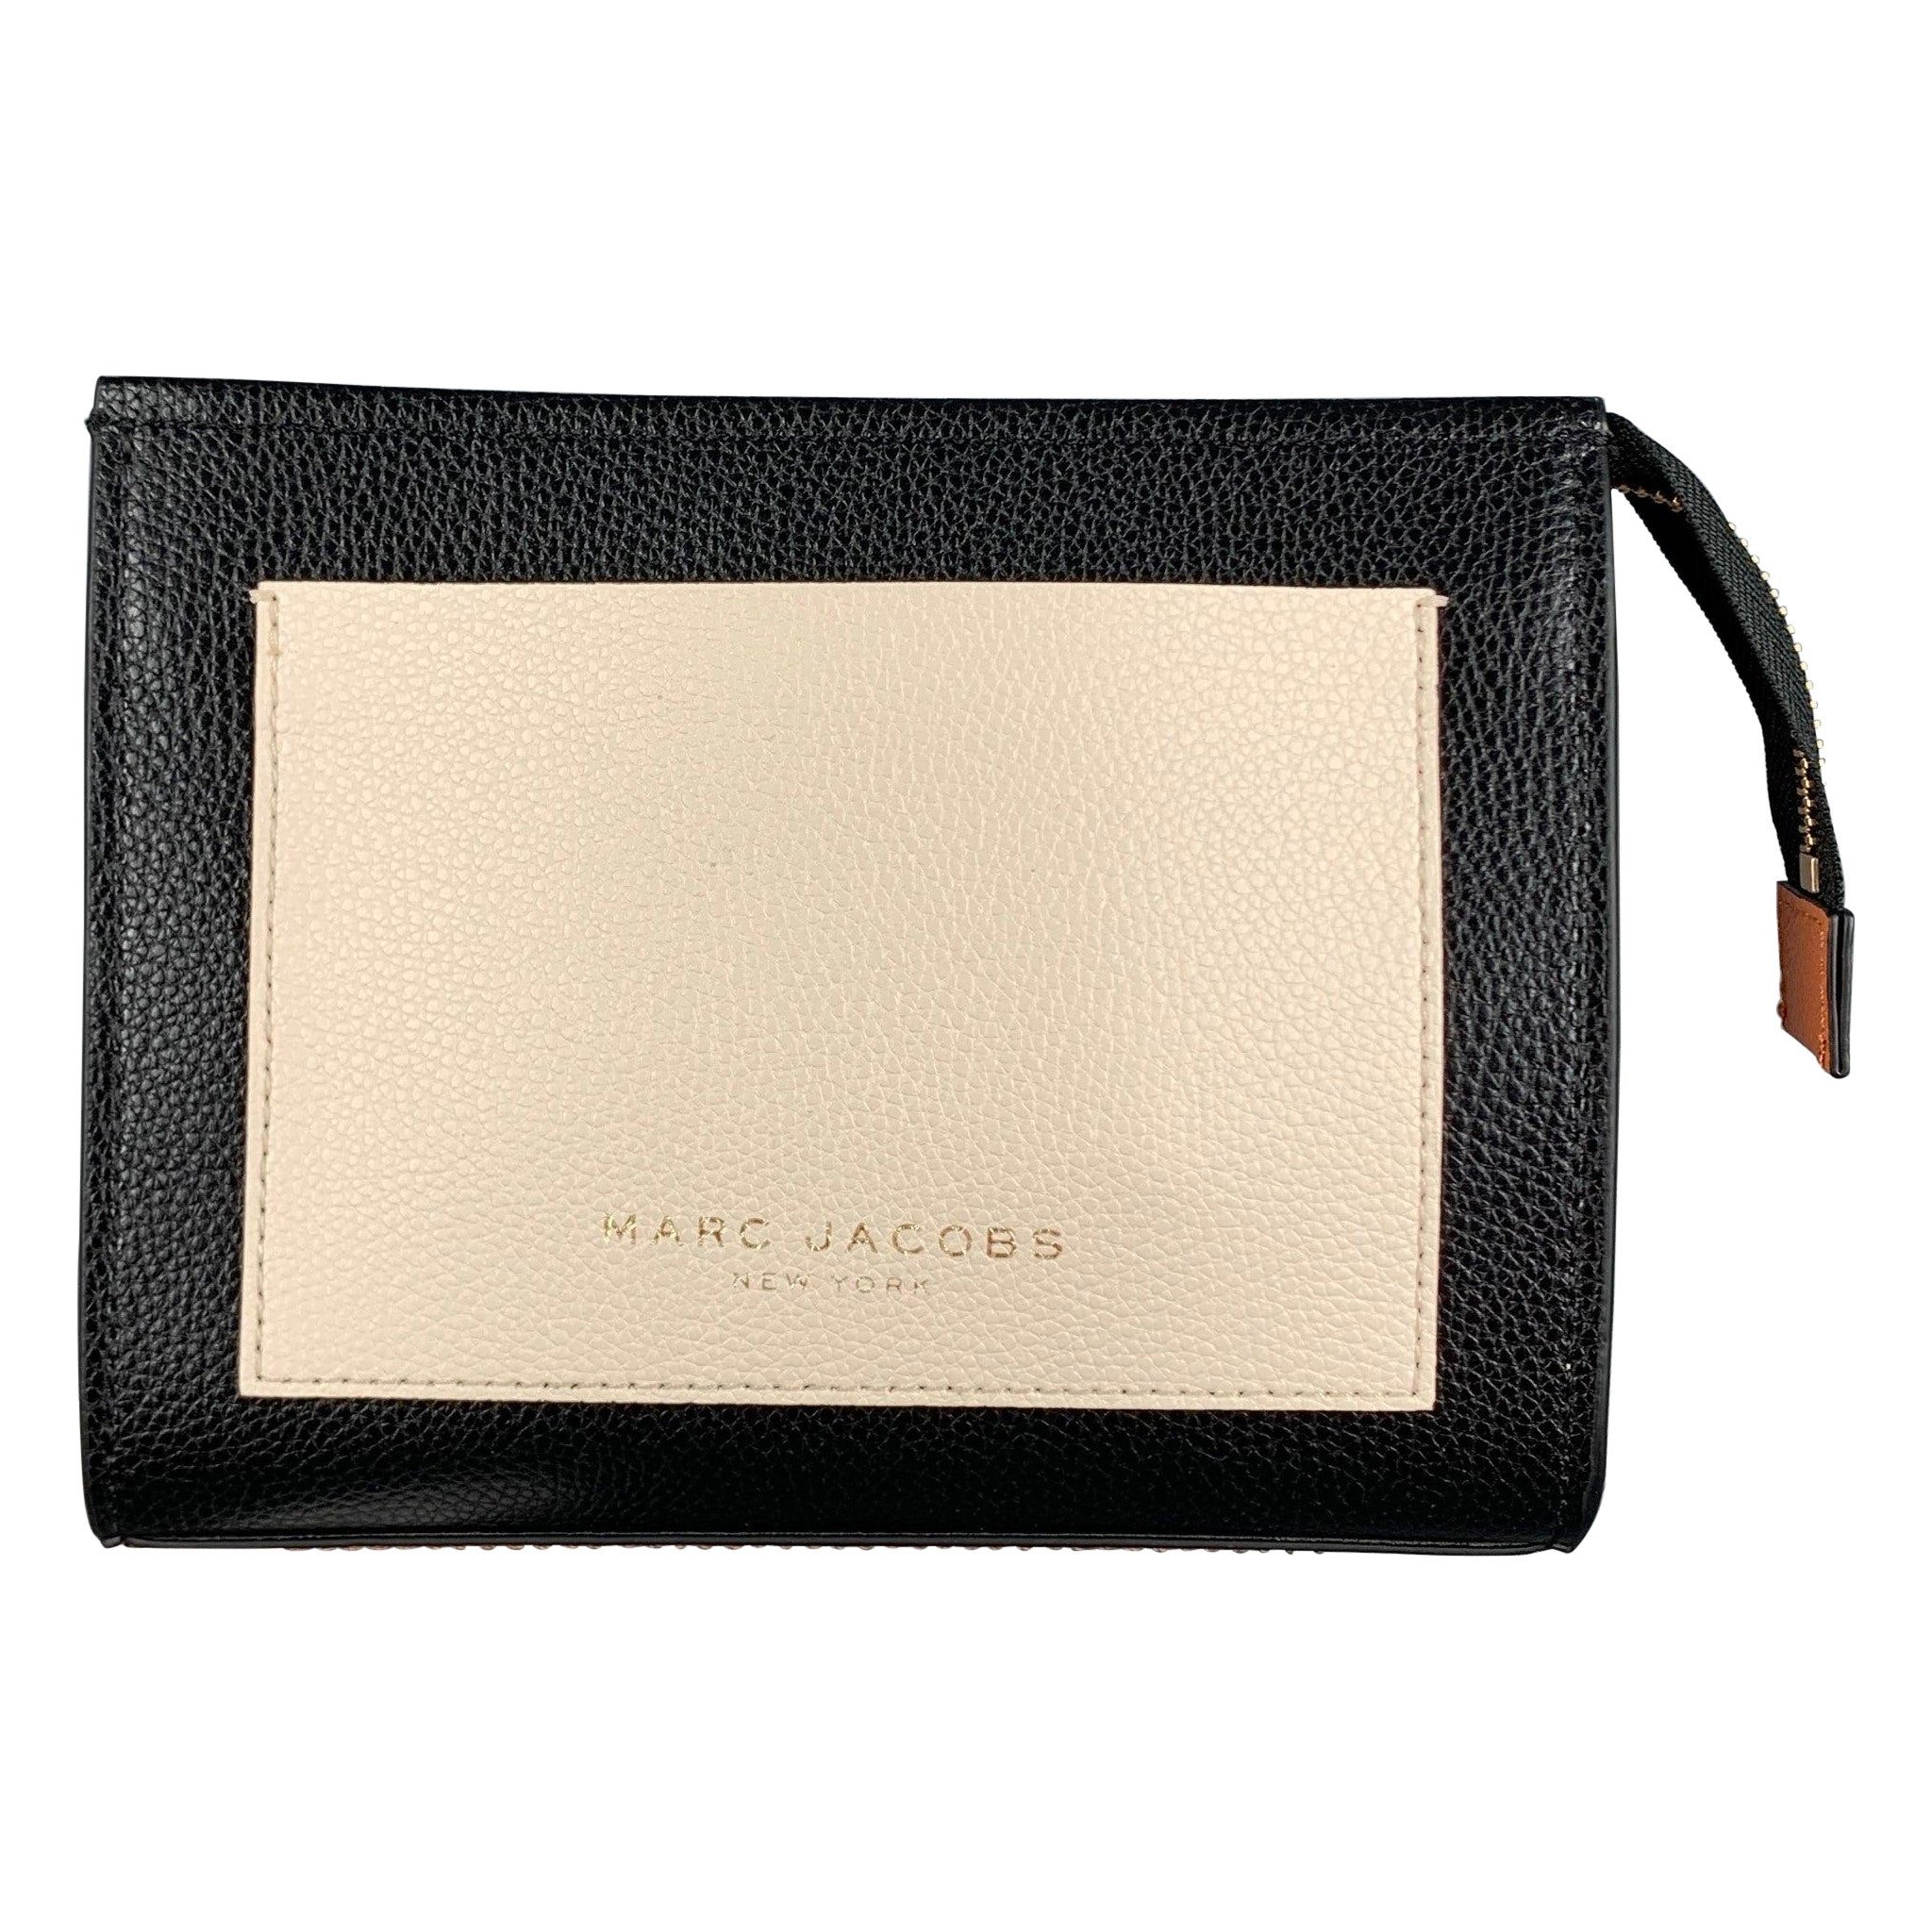 MARC JACOBS Black Tan Color Block Leather Clutch For Sale